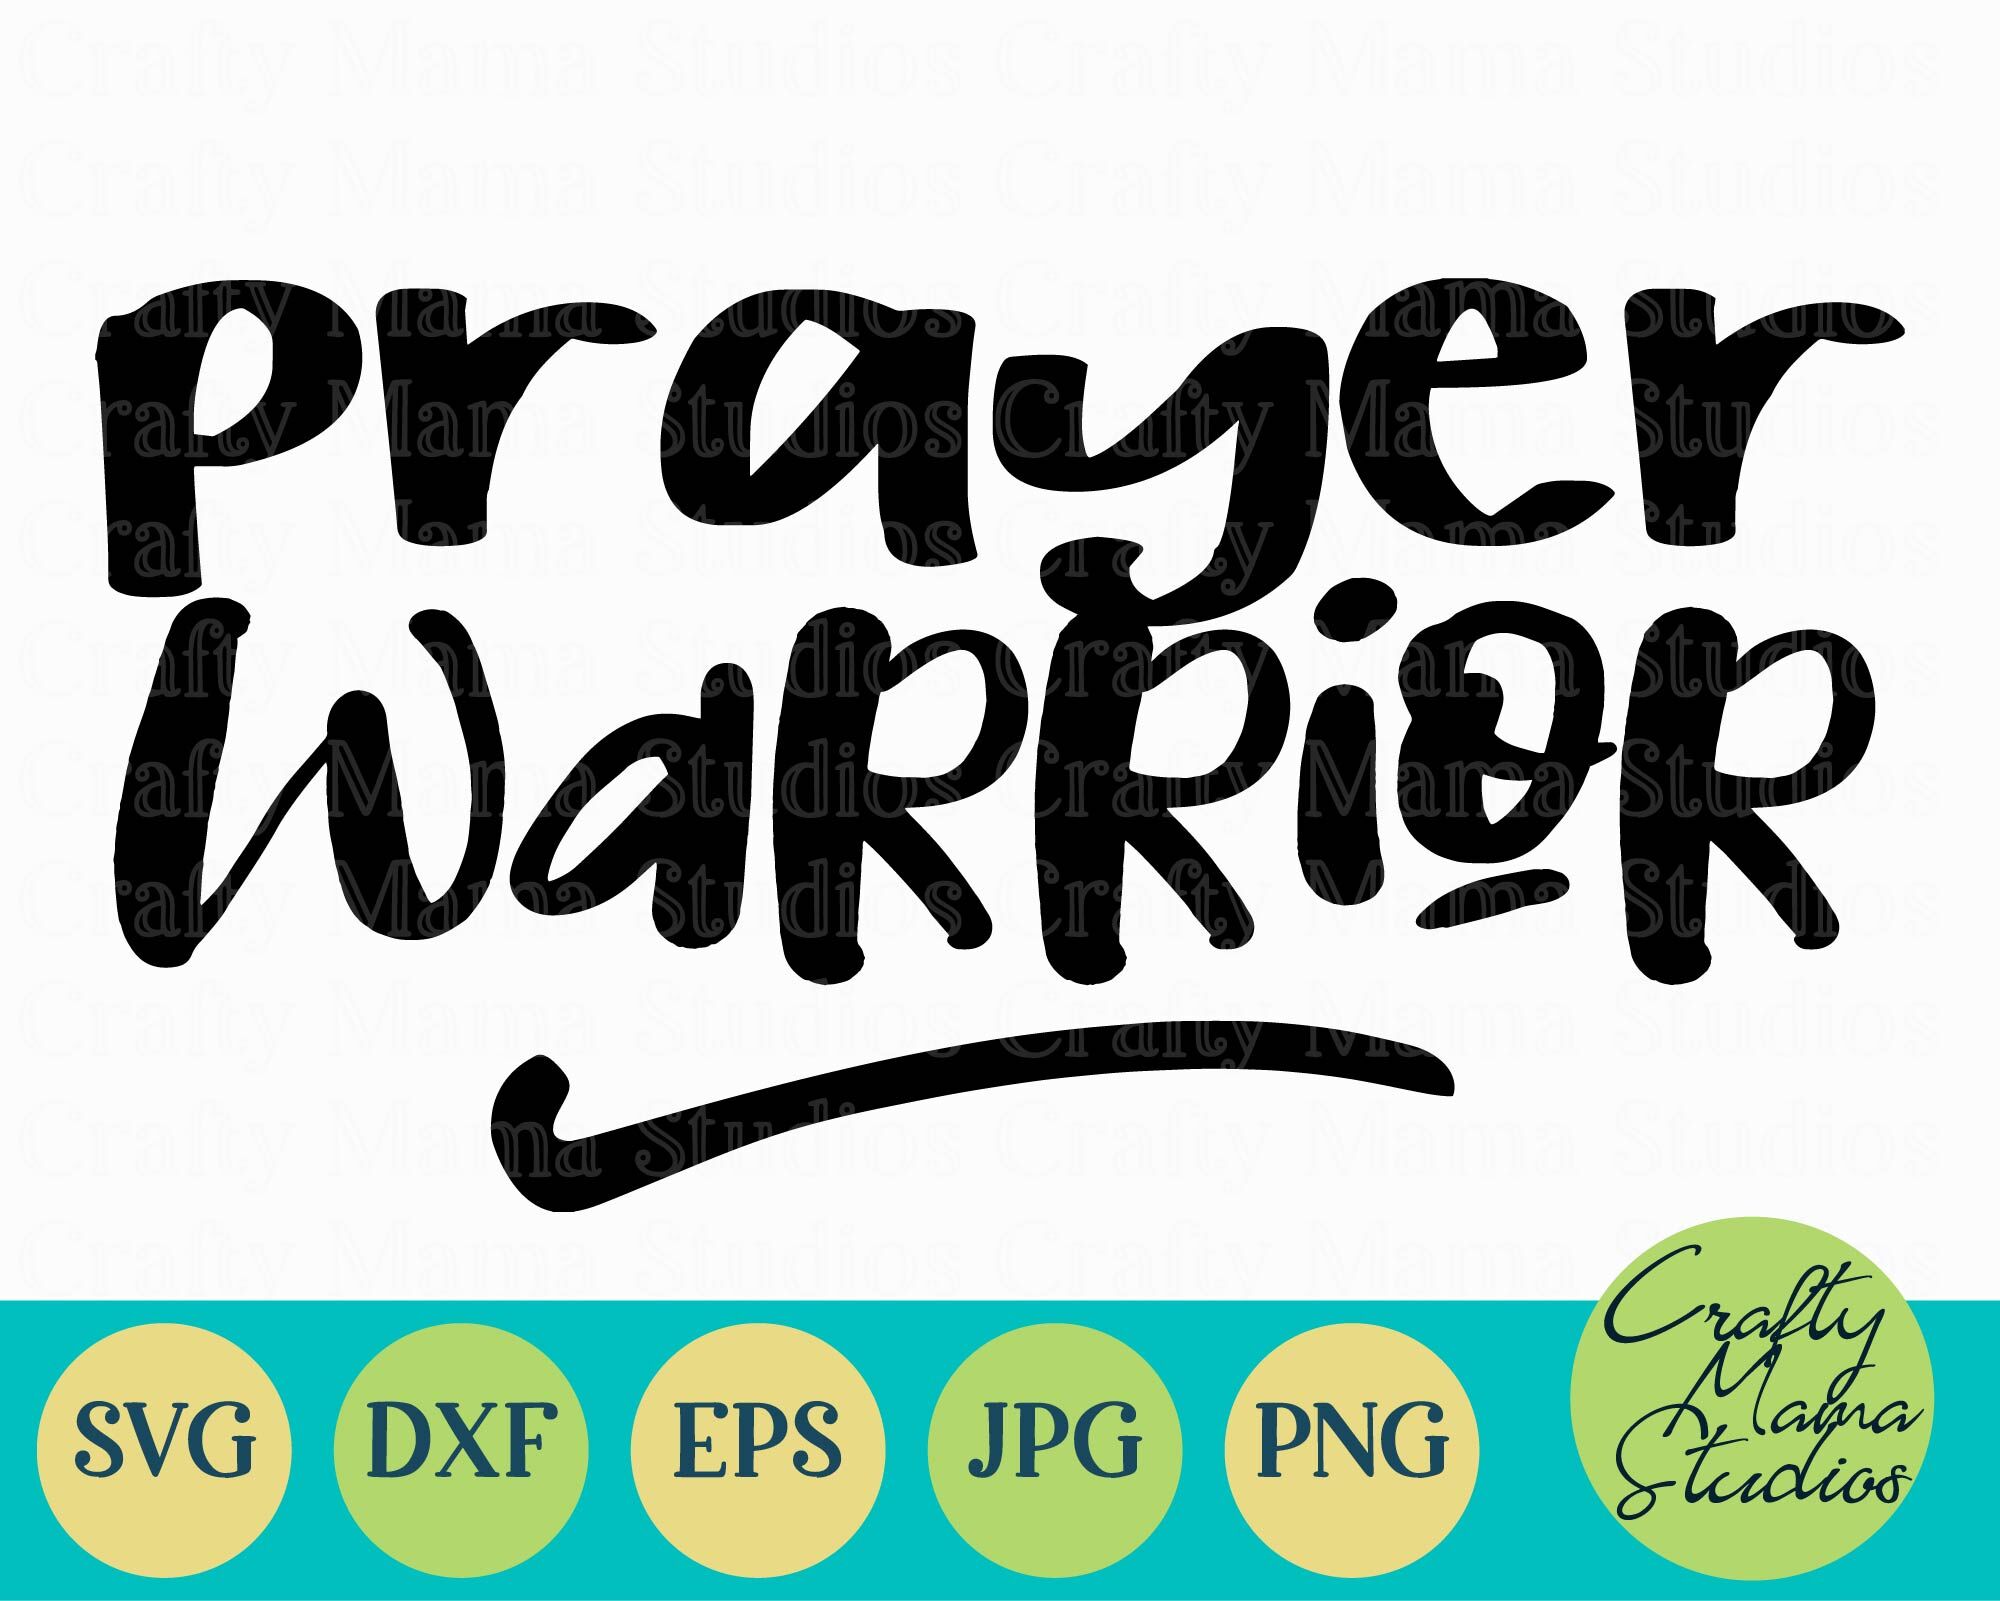 Inspirational Svg Christian Svg Prayer Warrior Svg By Crafty Mama Studios Thehungryjpeg Com